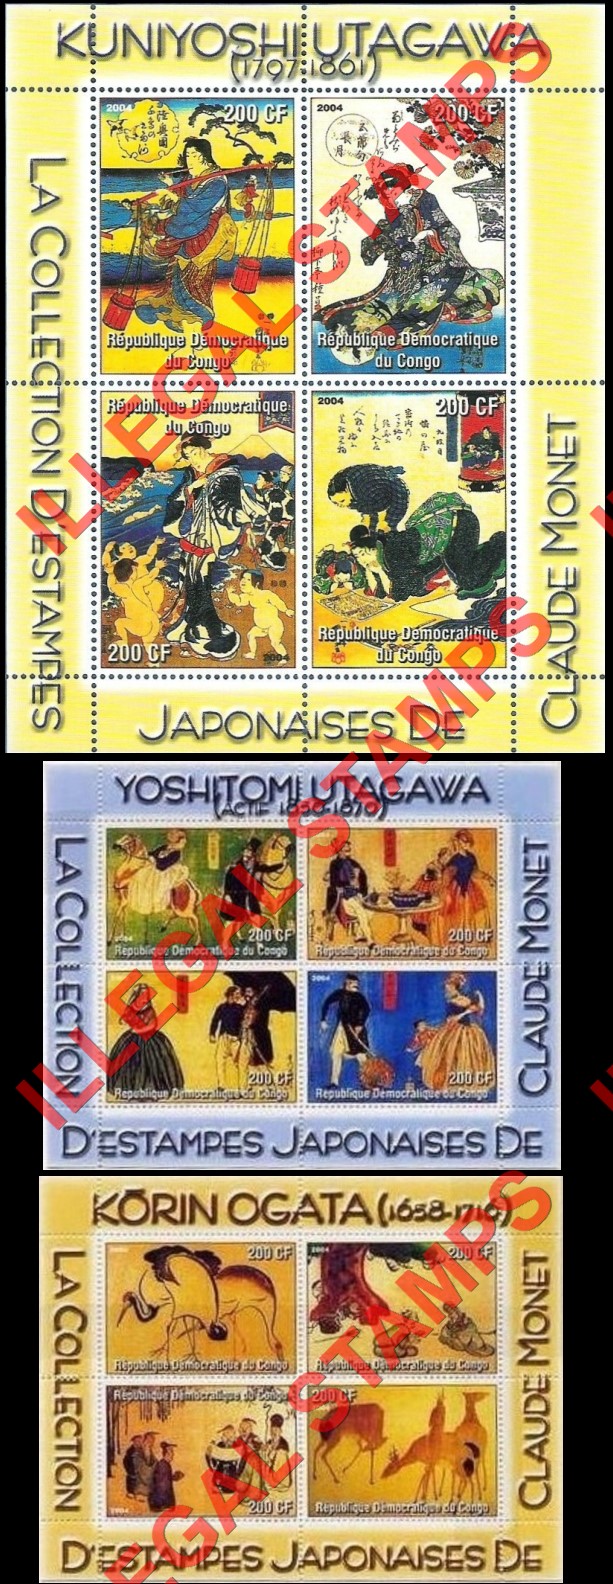 Congo Democratic Republic 2004 Japanese Prints Illegal Stamp Souvenir Sheets of 4